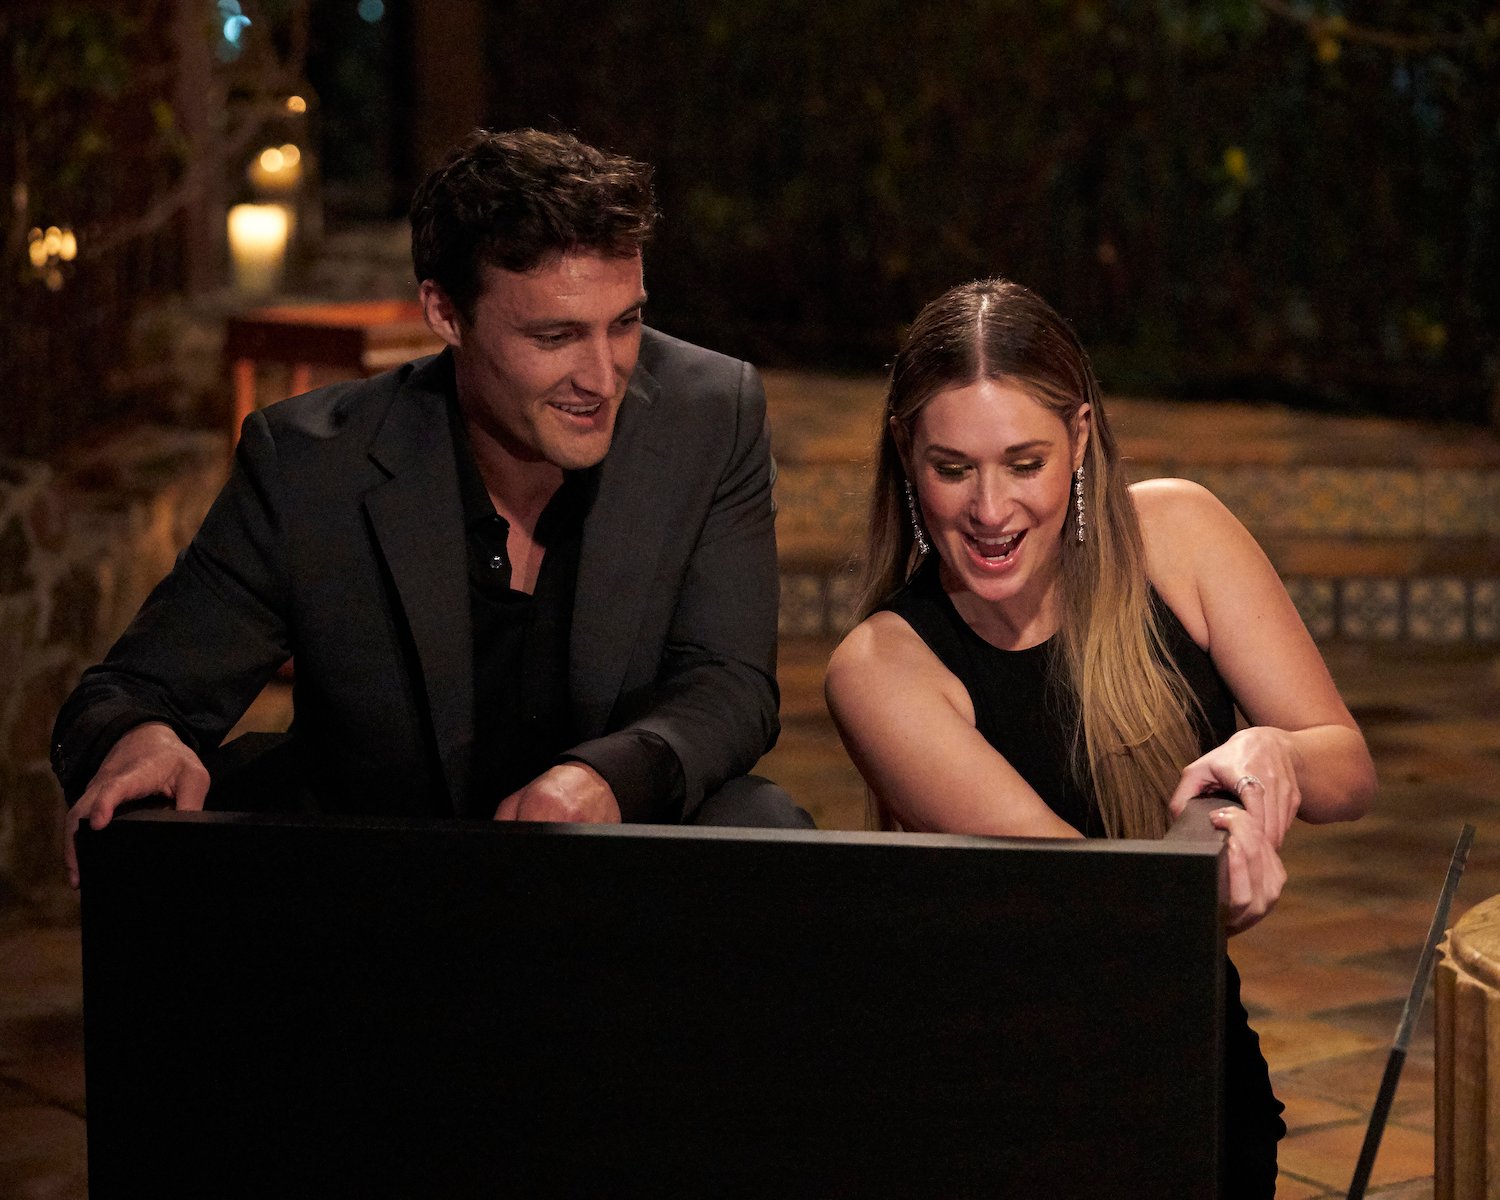 Tino Franco and Rachel Recchia sitting together in 'The Bachelorette' Season 19